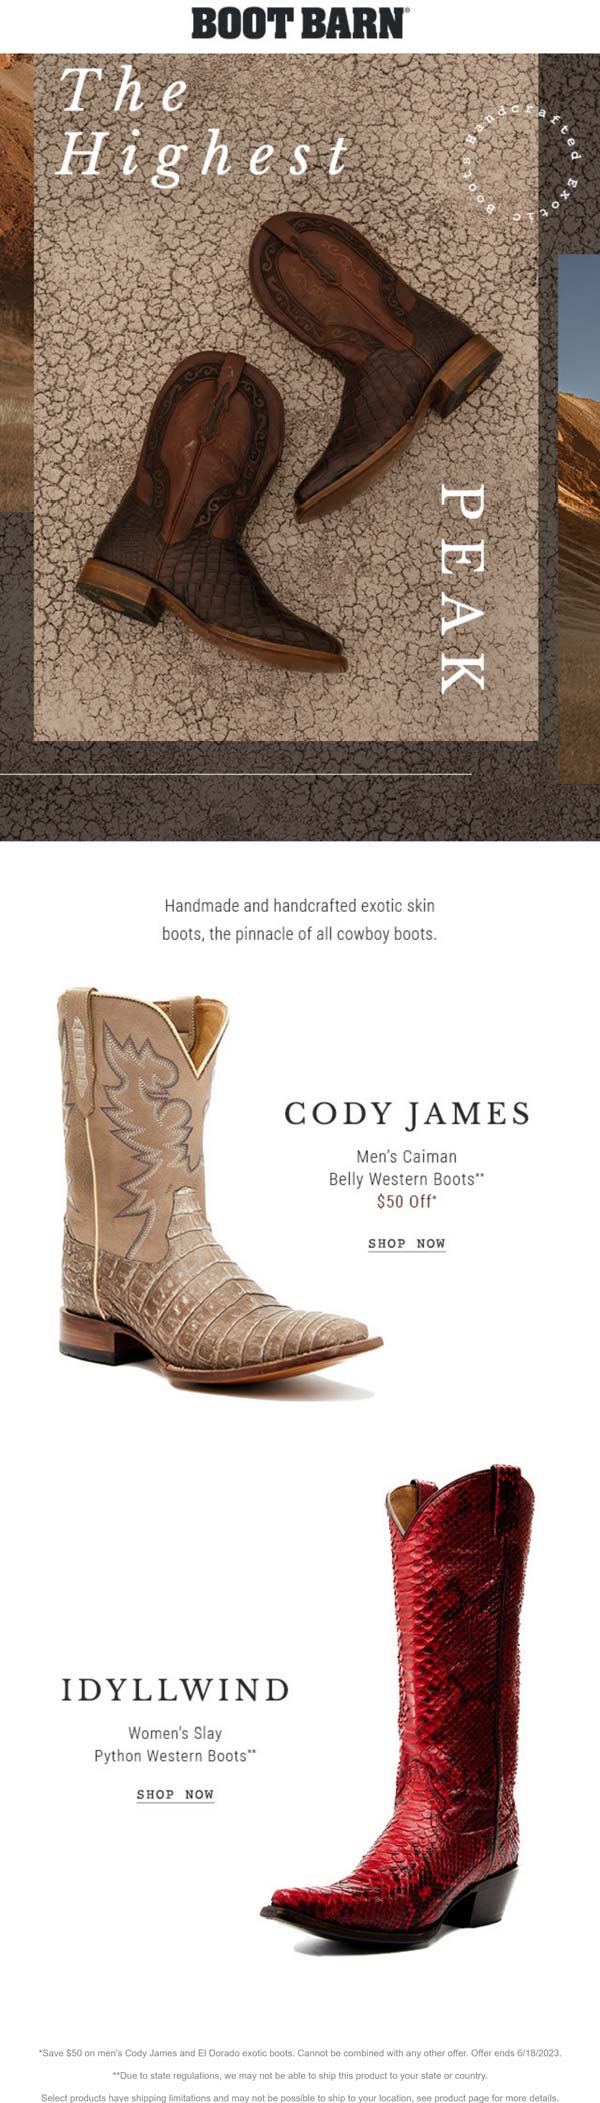 Boot Barn stores Coupon  $50 off various Cody James & El Dorado exotic boots at Boot Barn #bootbarn 